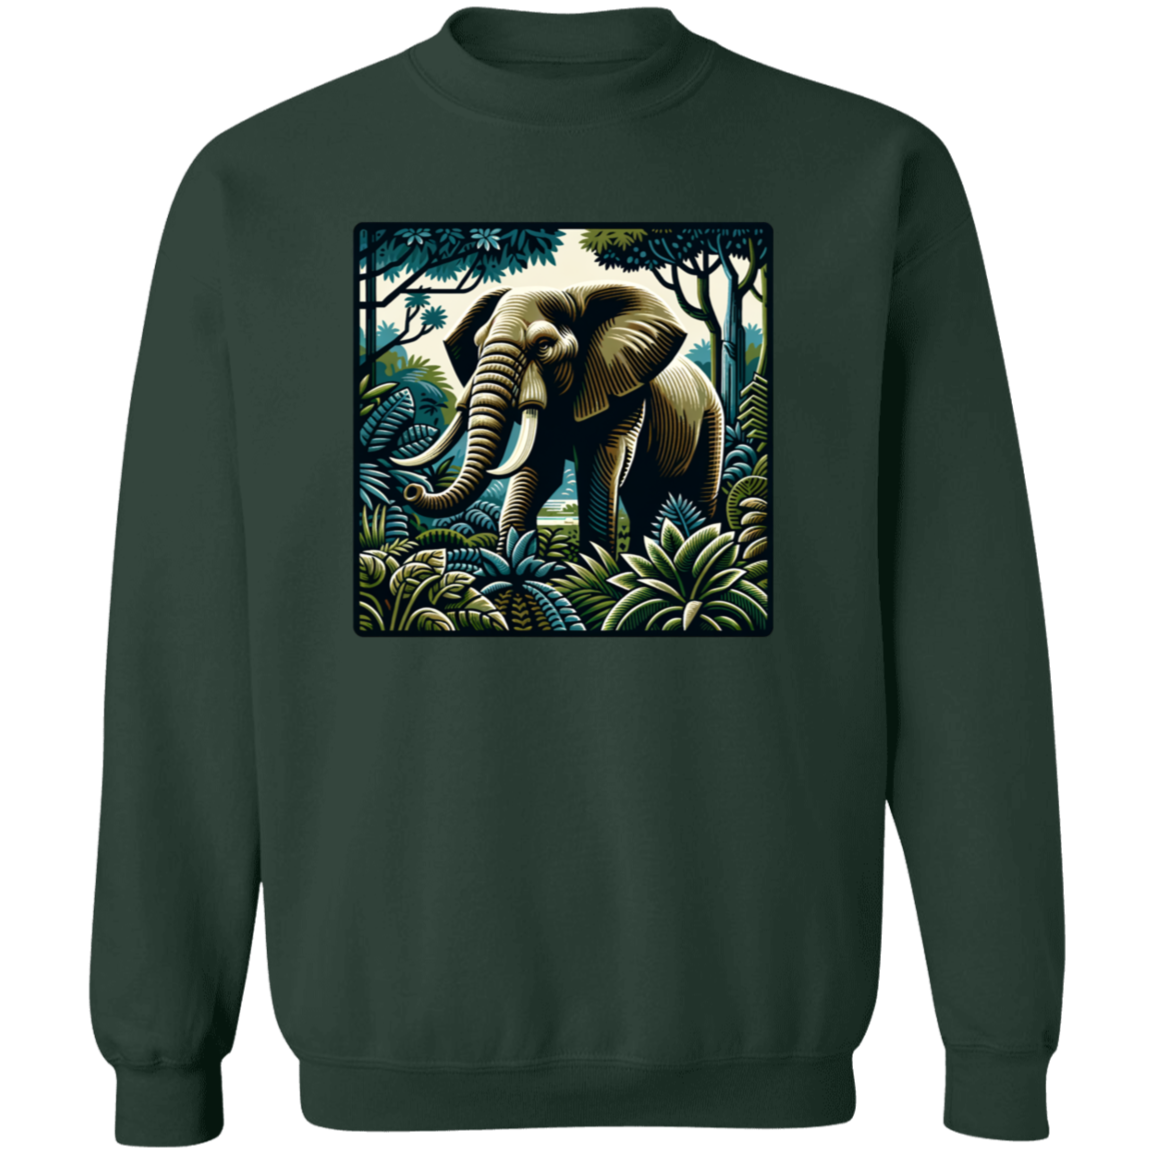 Block Print Elephant - T-shirts, Hoodies and Sweatshirts